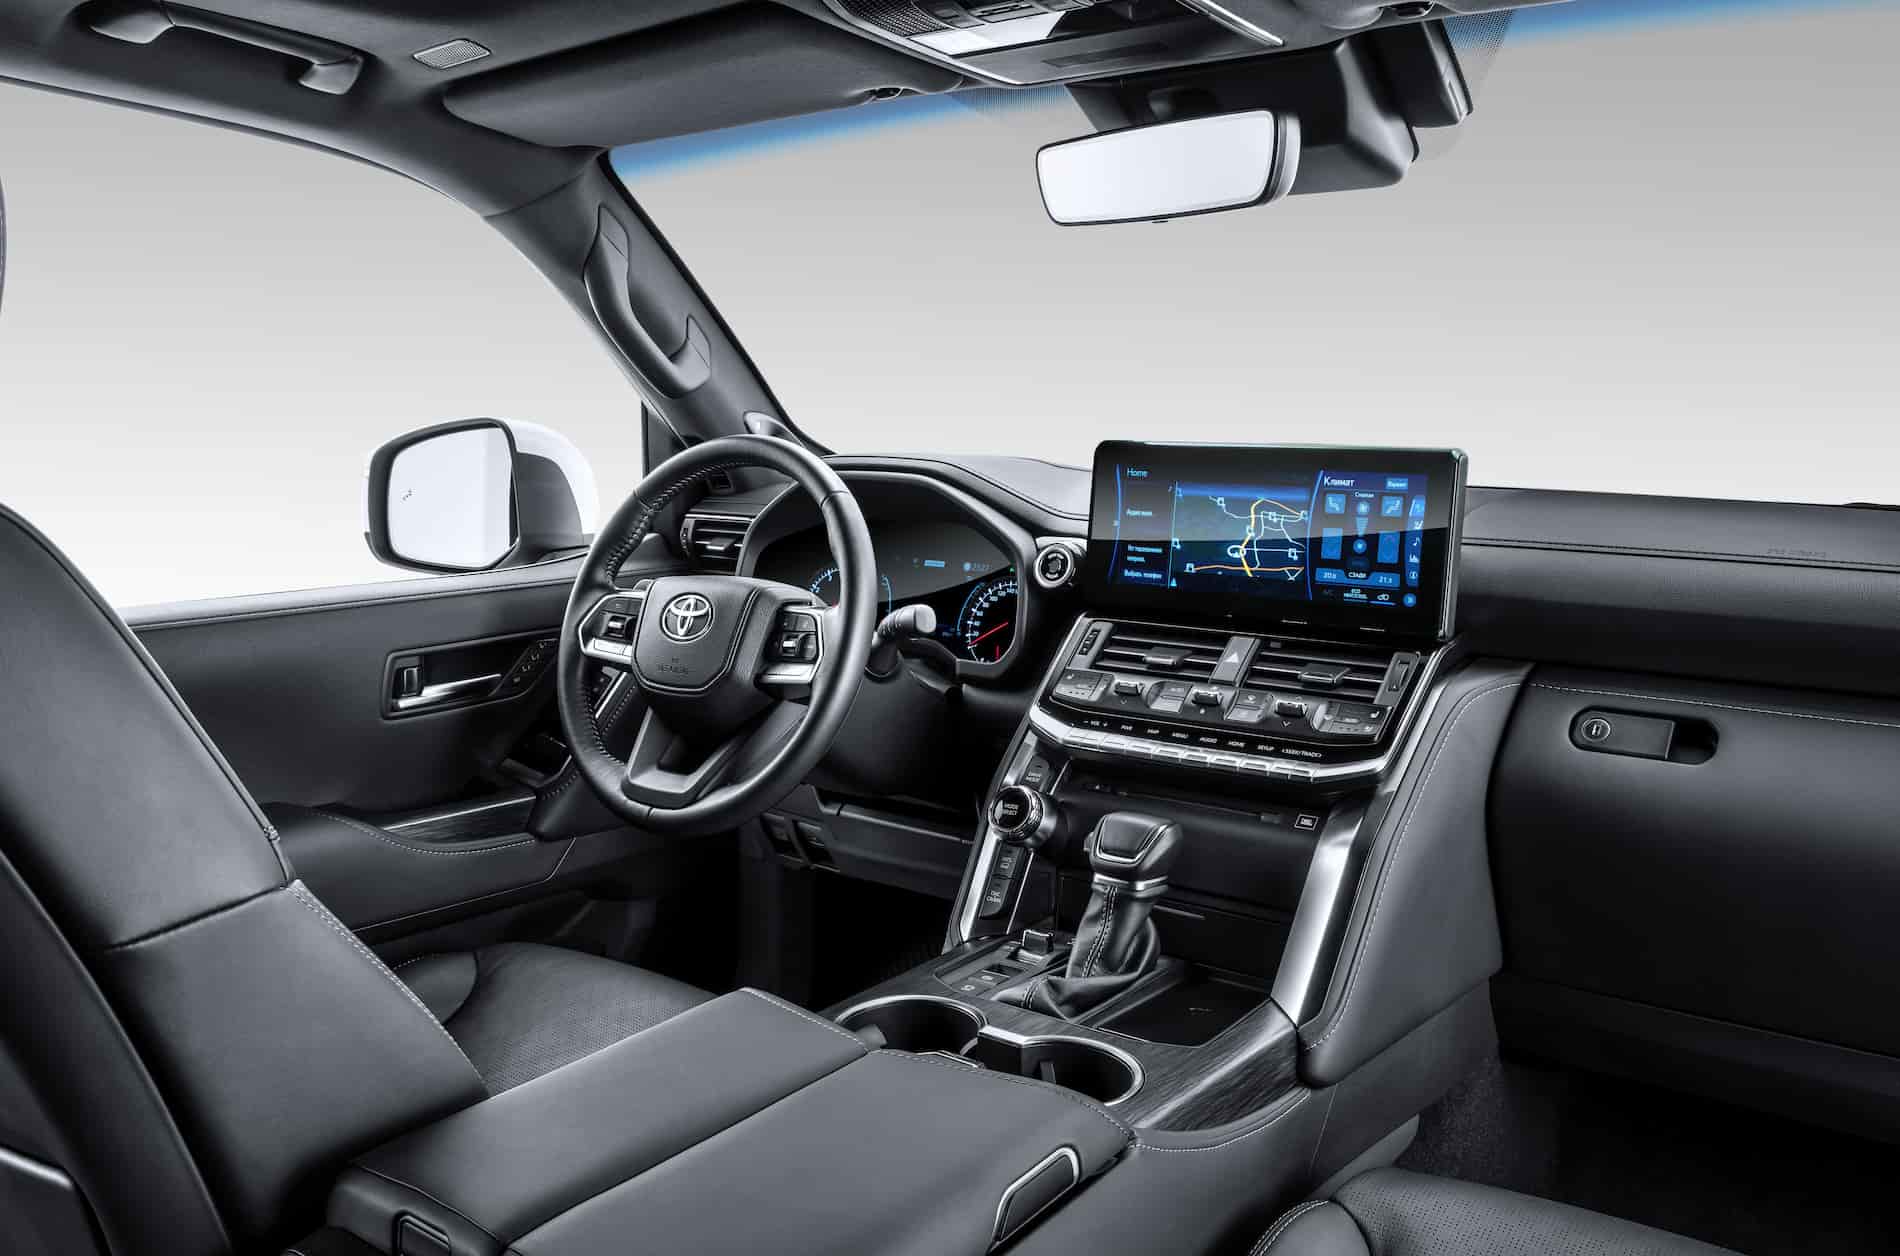 Land Cruiser 300 interior